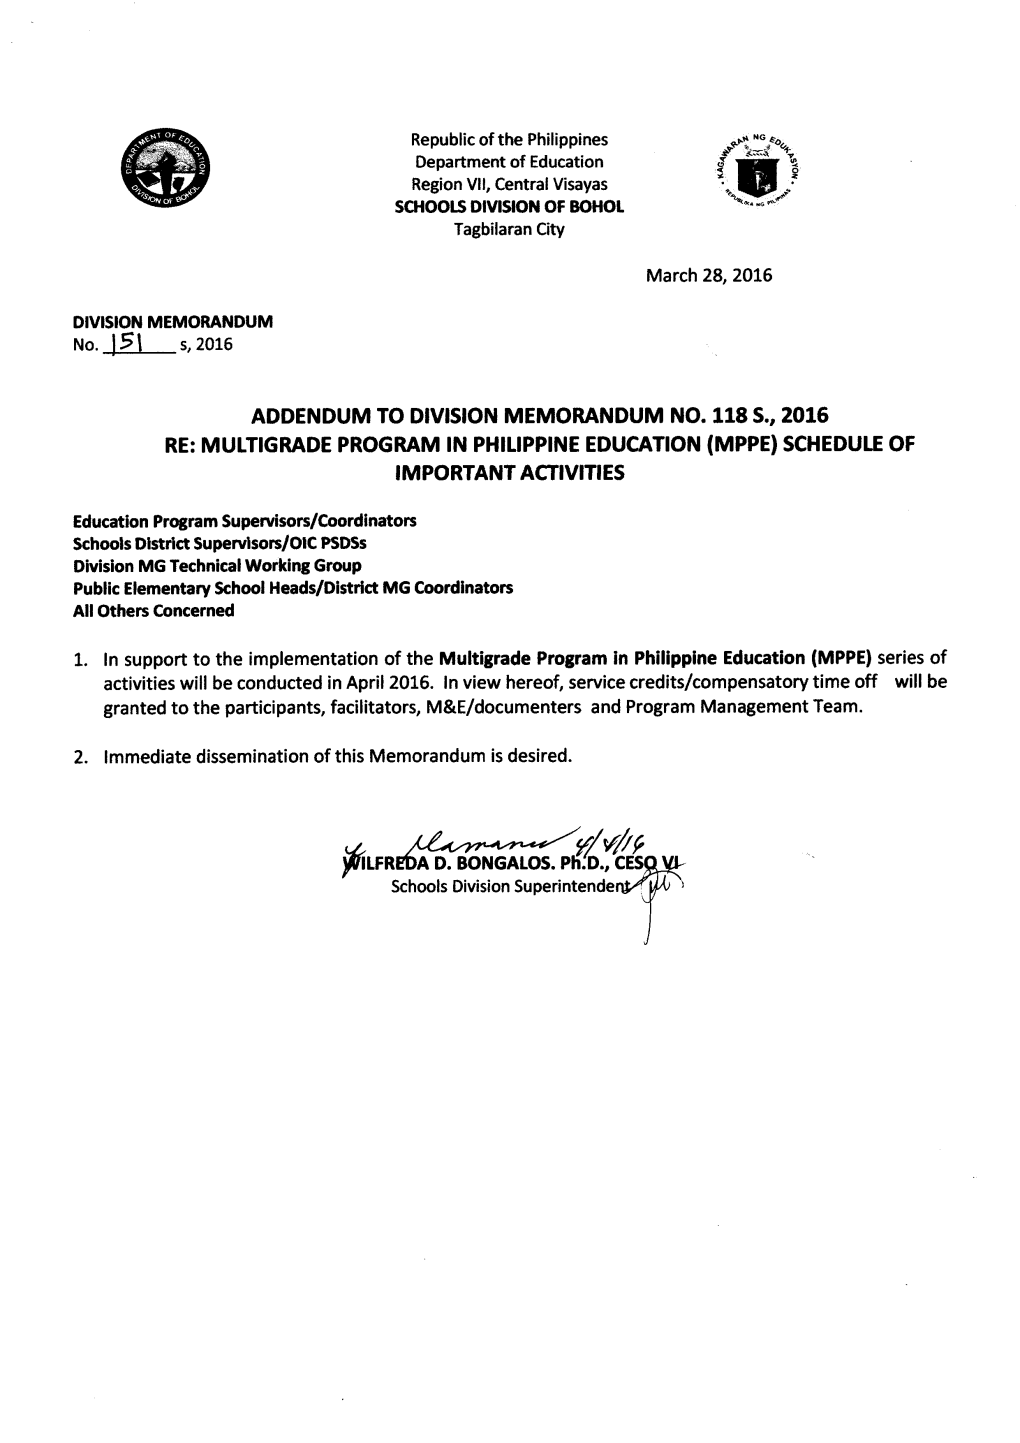 Re Multigrade Program In Philippine Education Mppe Schedule Of Important Activities Docslib 8664